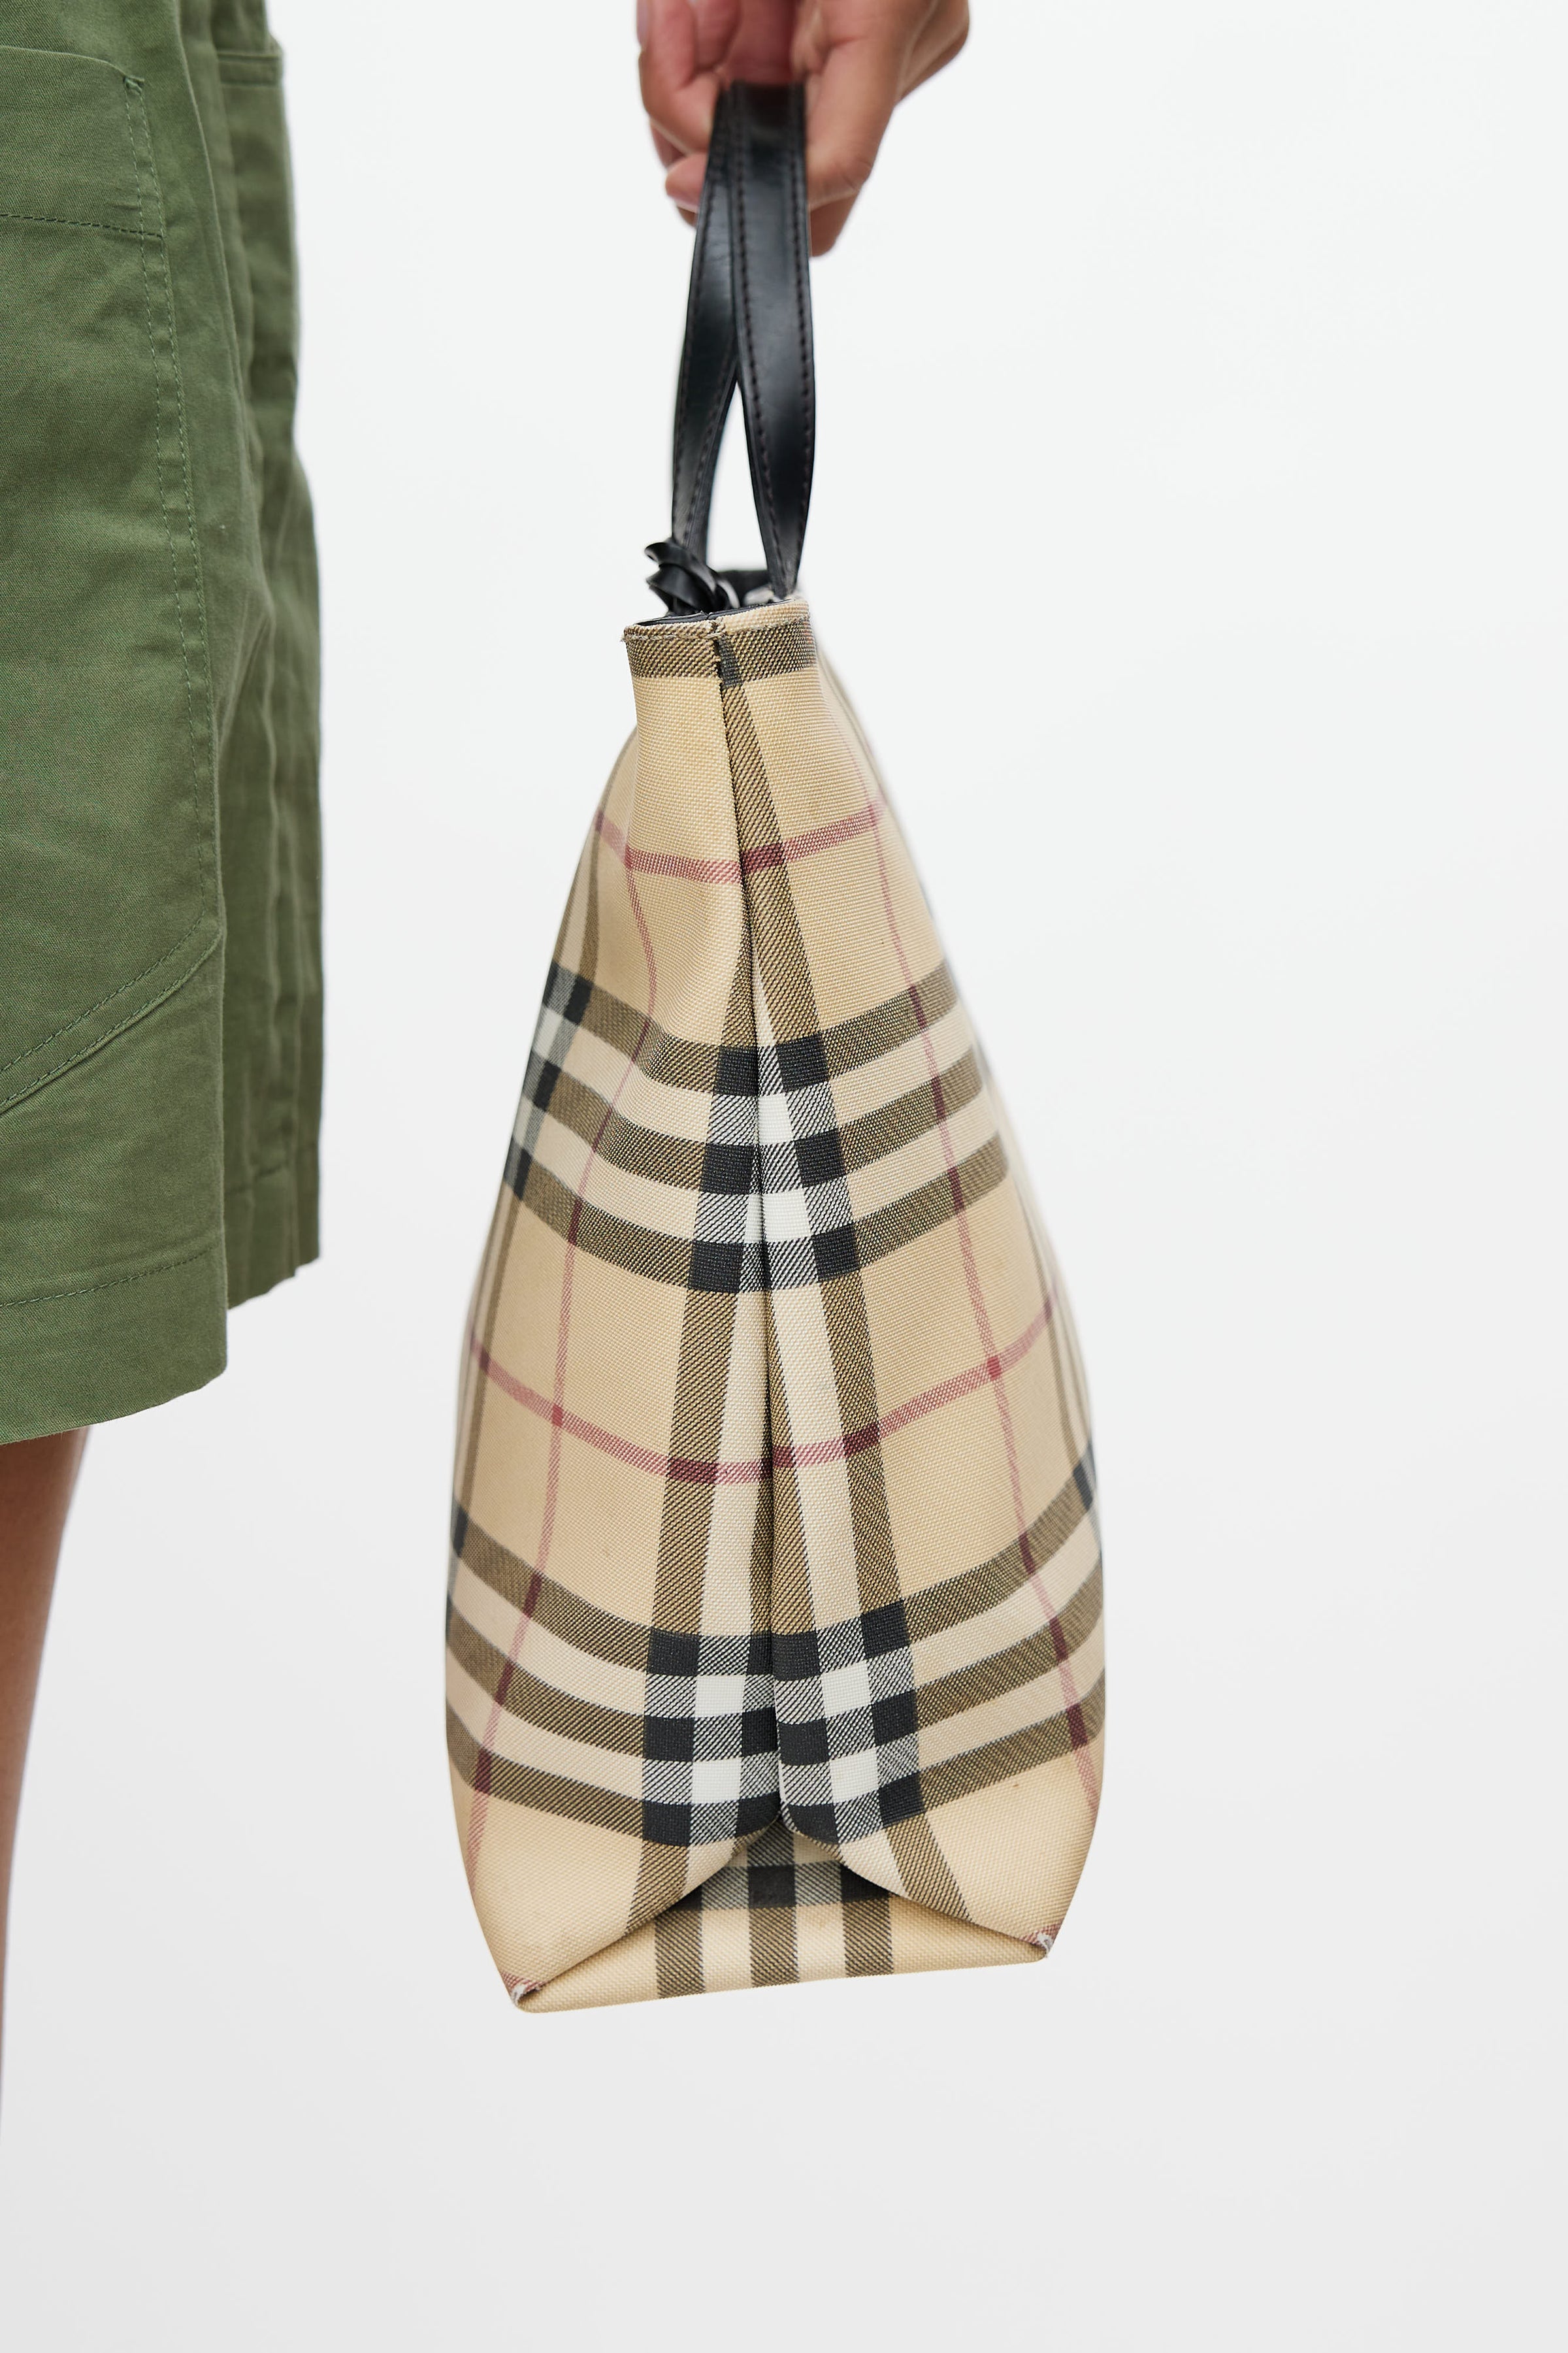 Burberry tote bag “Nova Check” - Comptoir Vintage